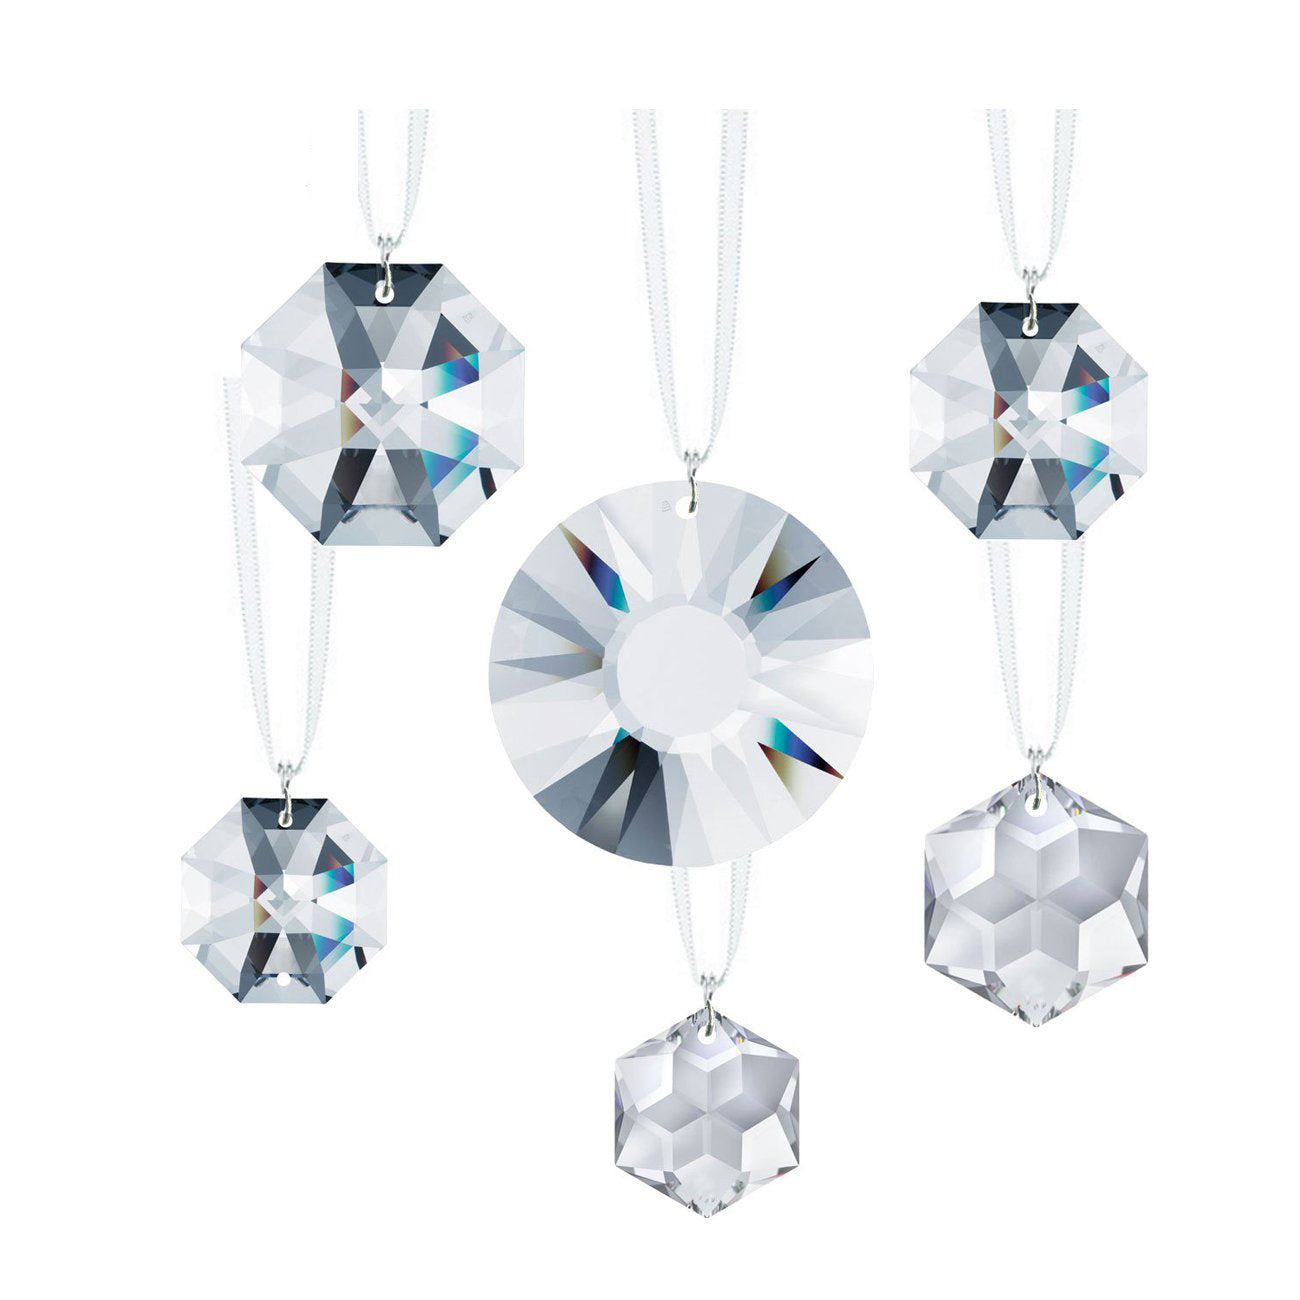 6-set Unique Crystal Decor Hangings, Suncatcher Crystals for